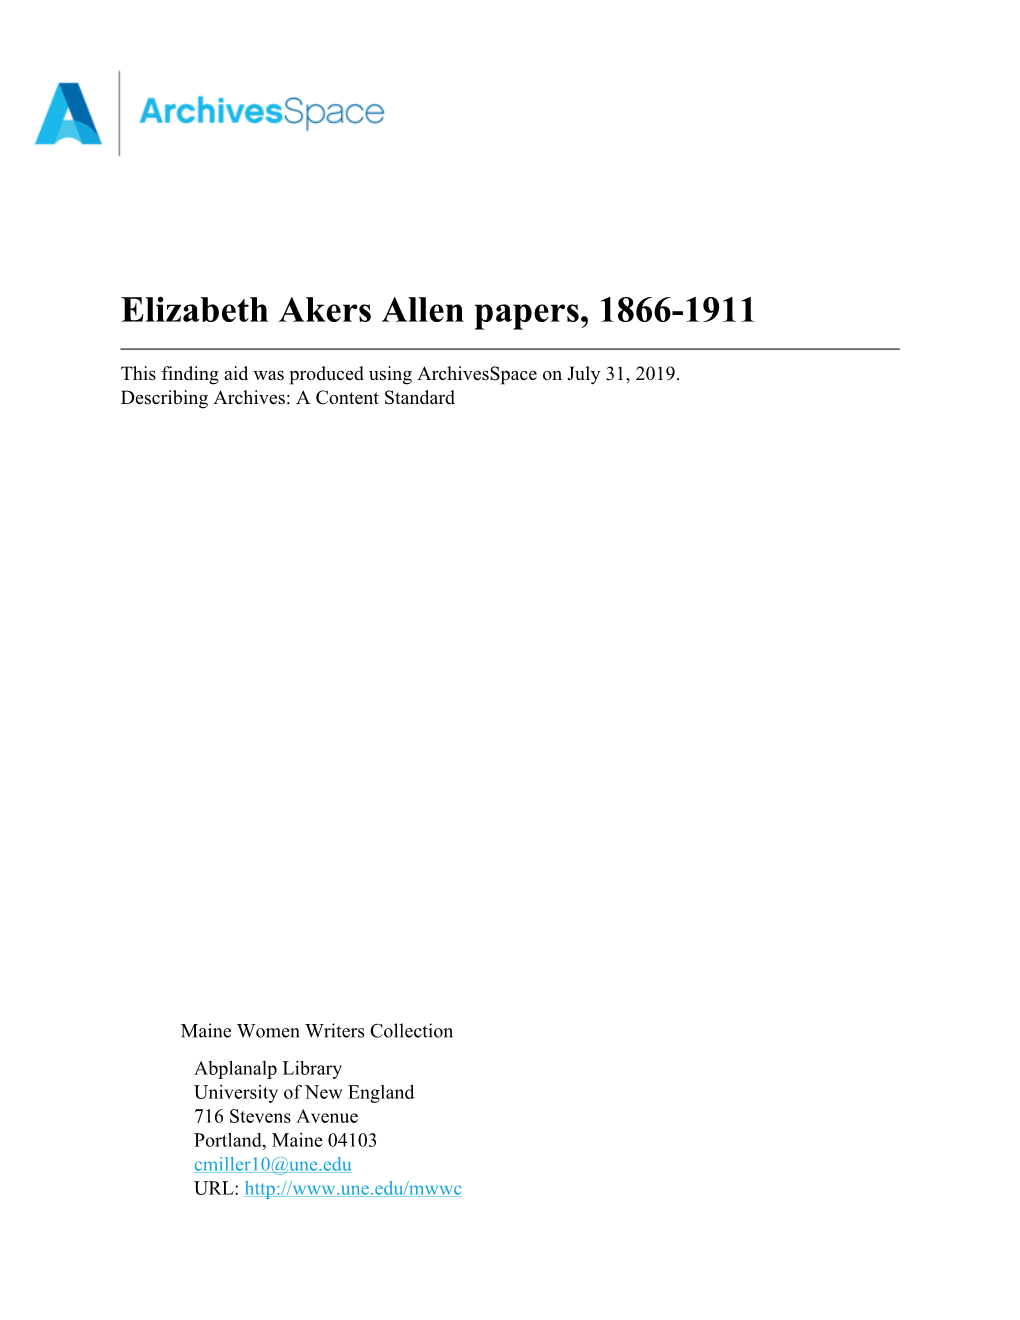 Elizabeth Akers Allen Papers, 1866-1911